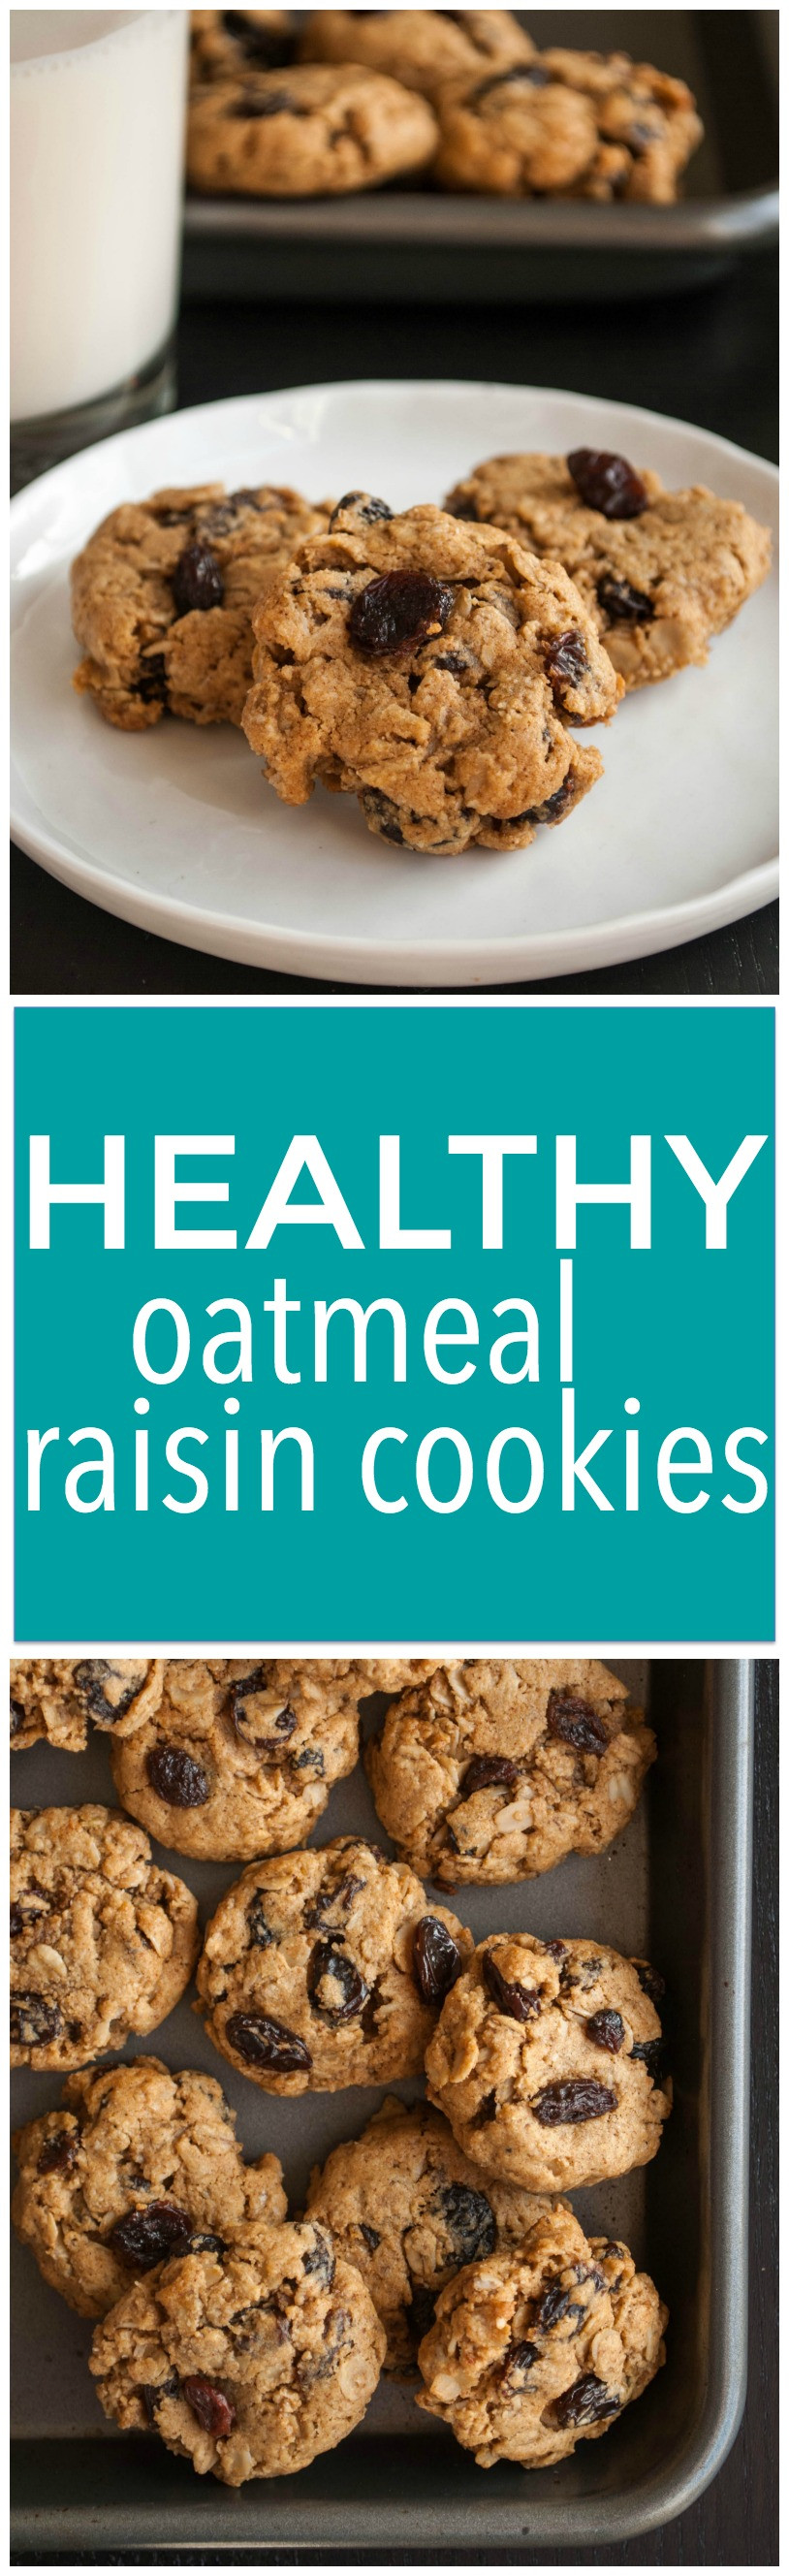 Heart Healthy Oatmeal Cookies
 heart healthy oatmeal raisin cookies